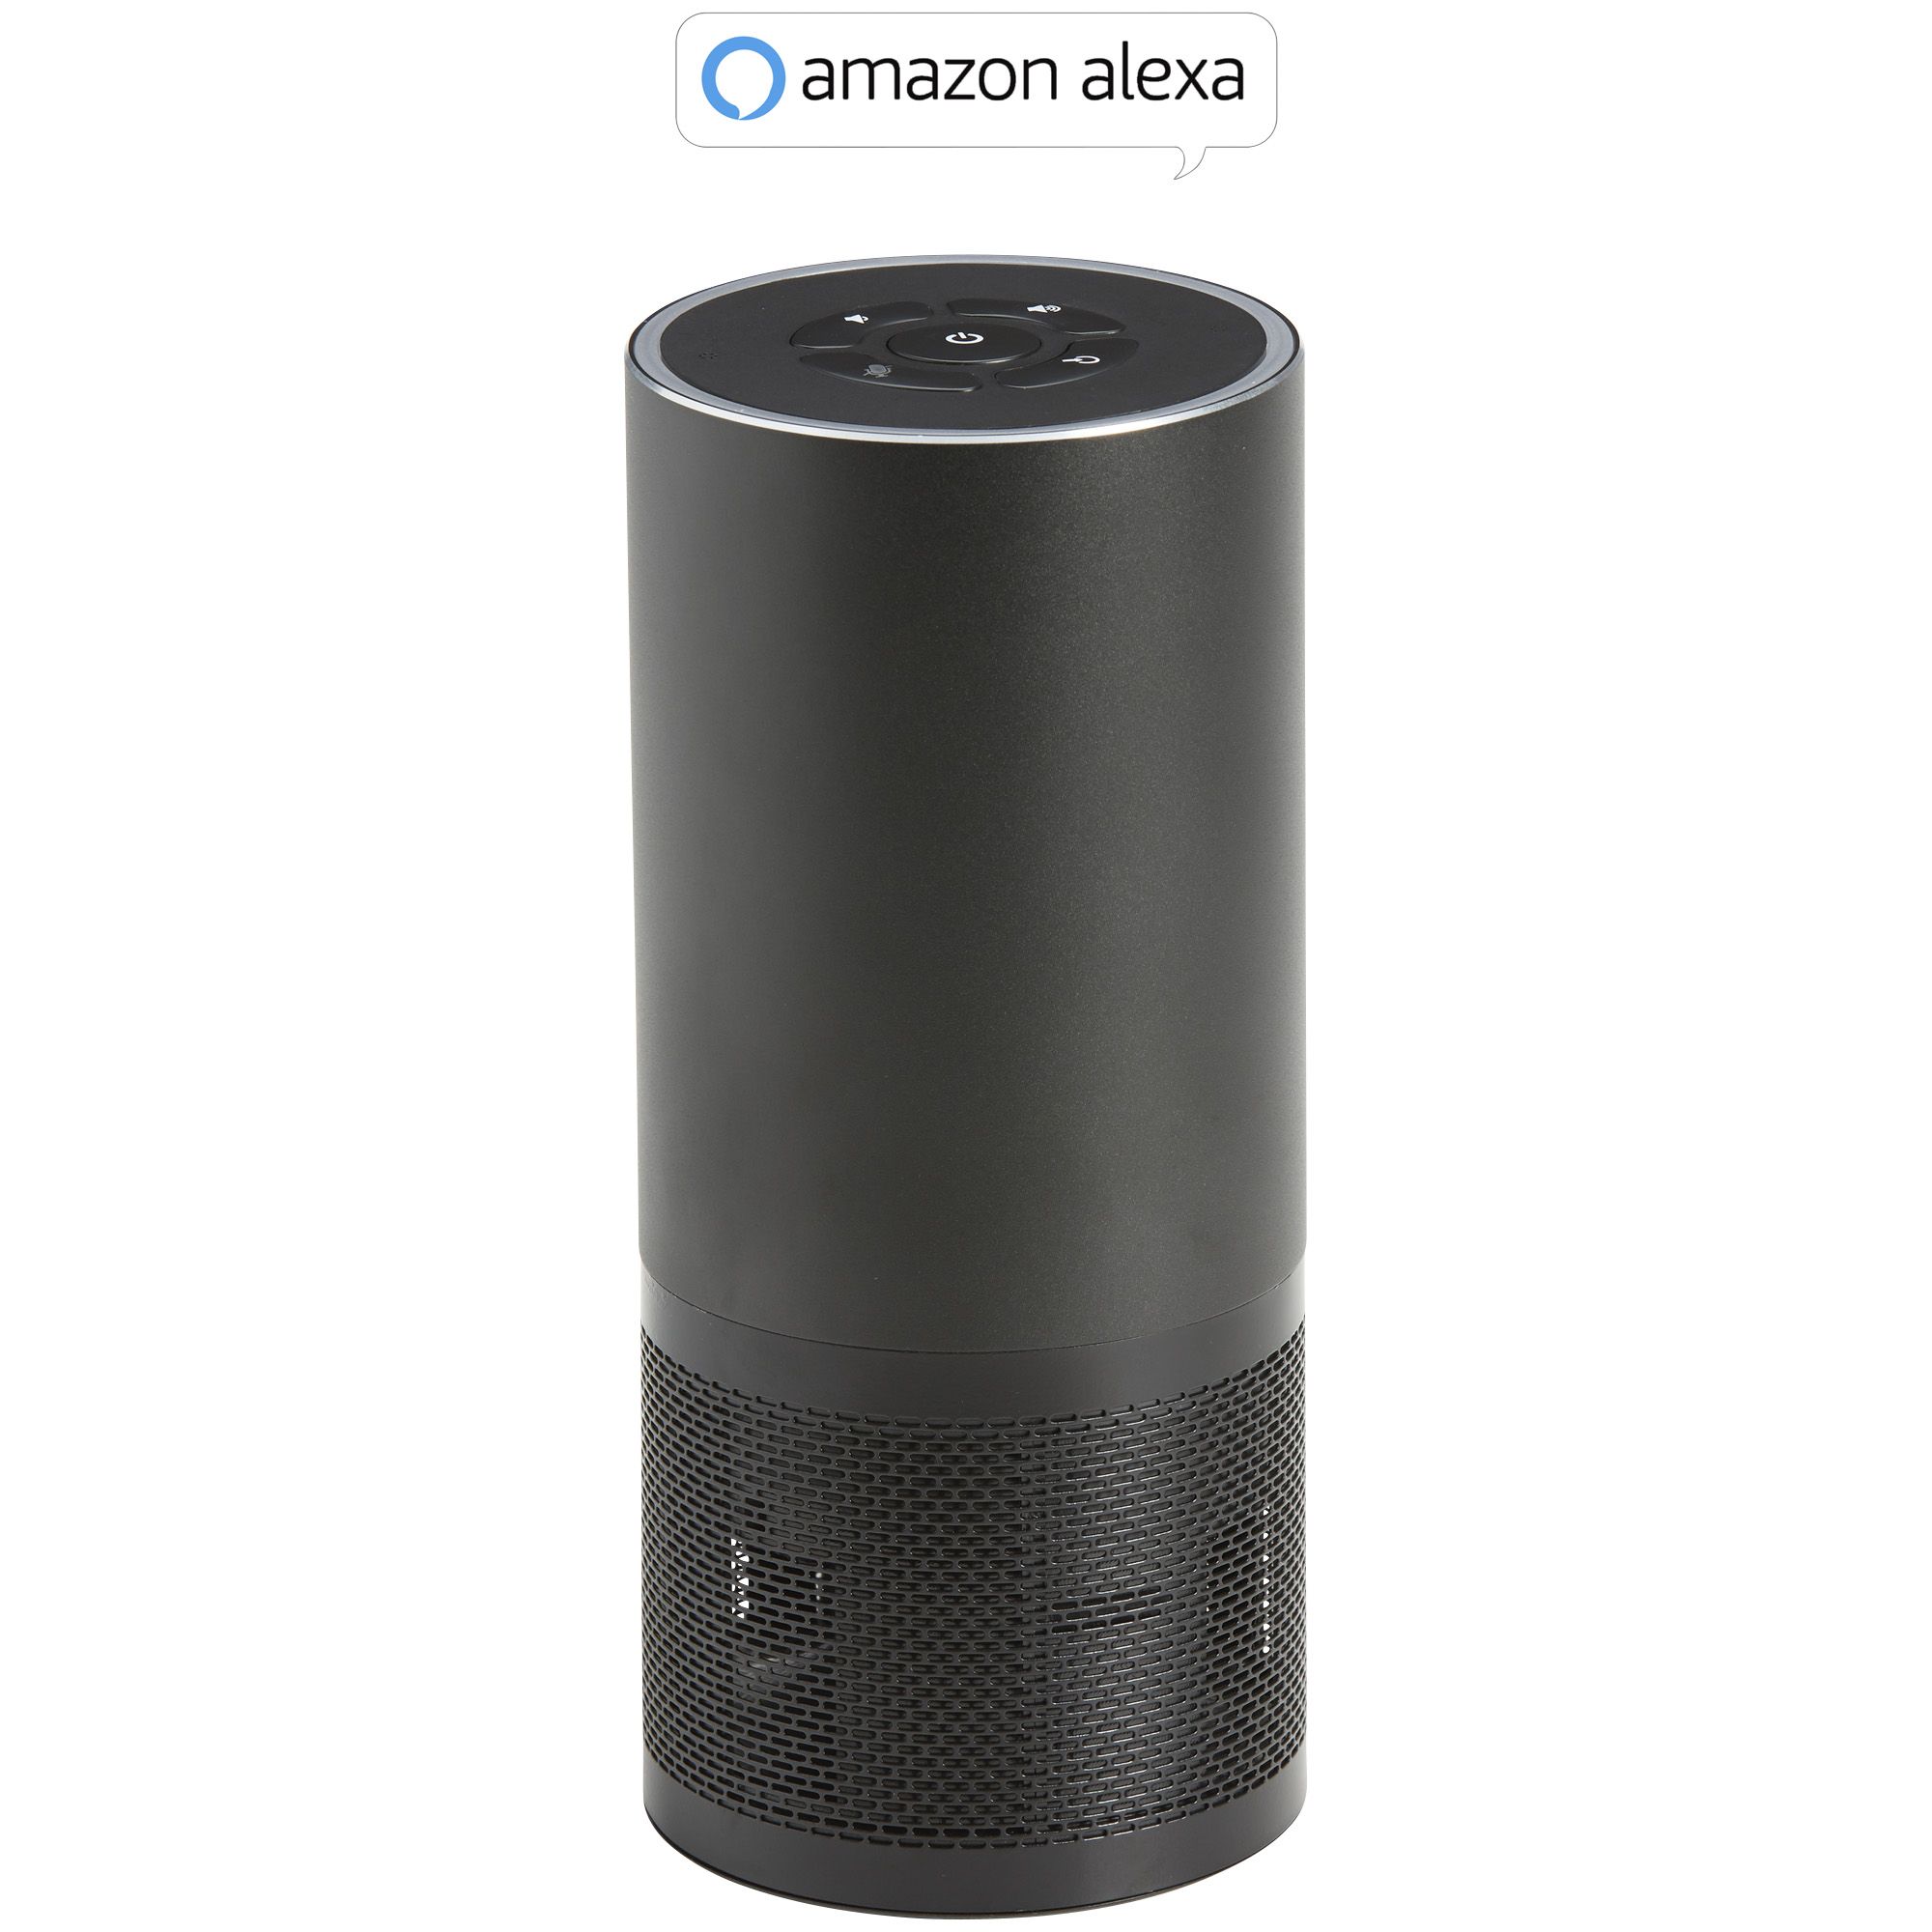 AVGO NPVXZ Bluetooth Speaker With Alexa. 